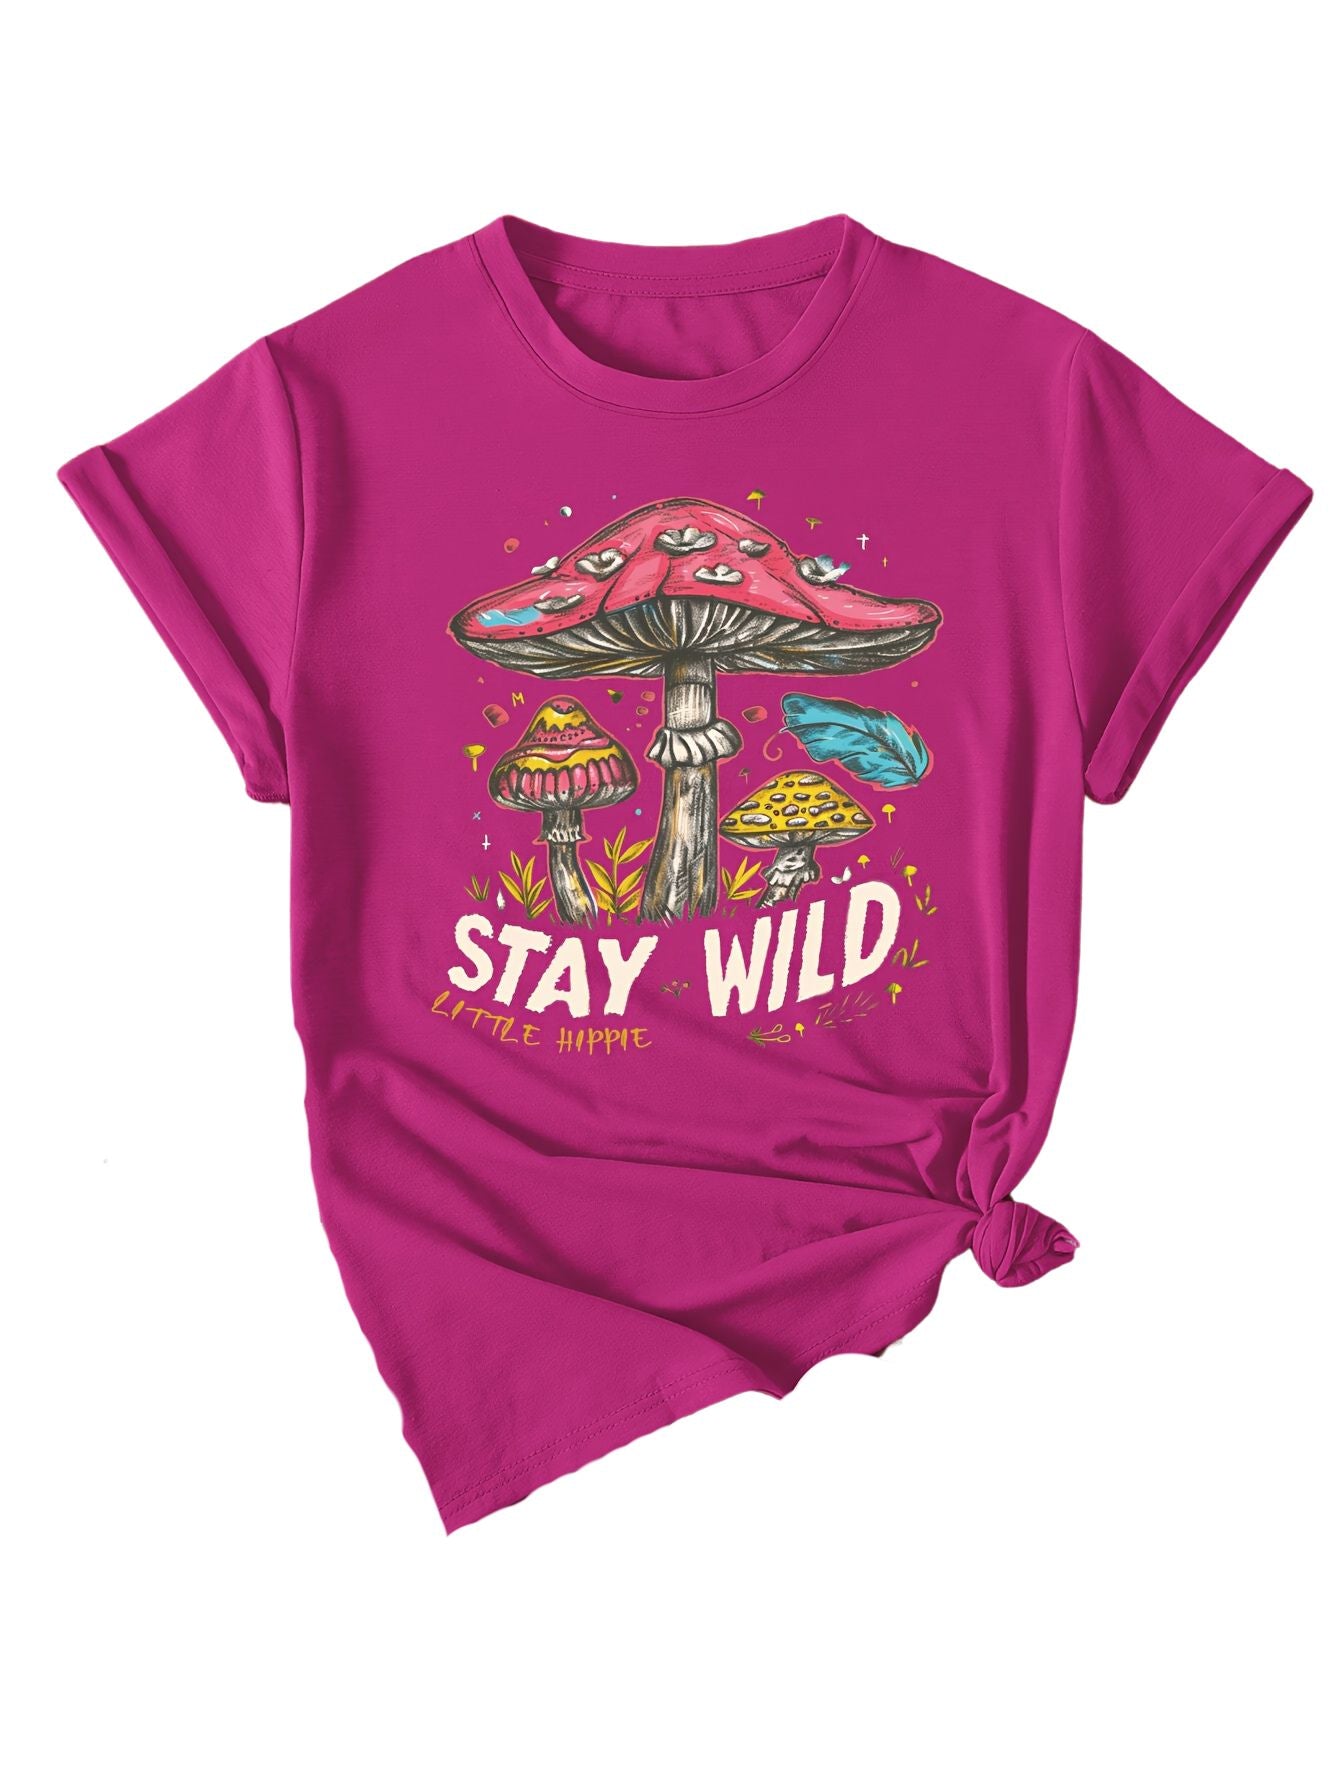 Mushroom Print T-shirt, Short Sleeve Crew Neck Casual Top For Summer & Spring, Women's Clothing